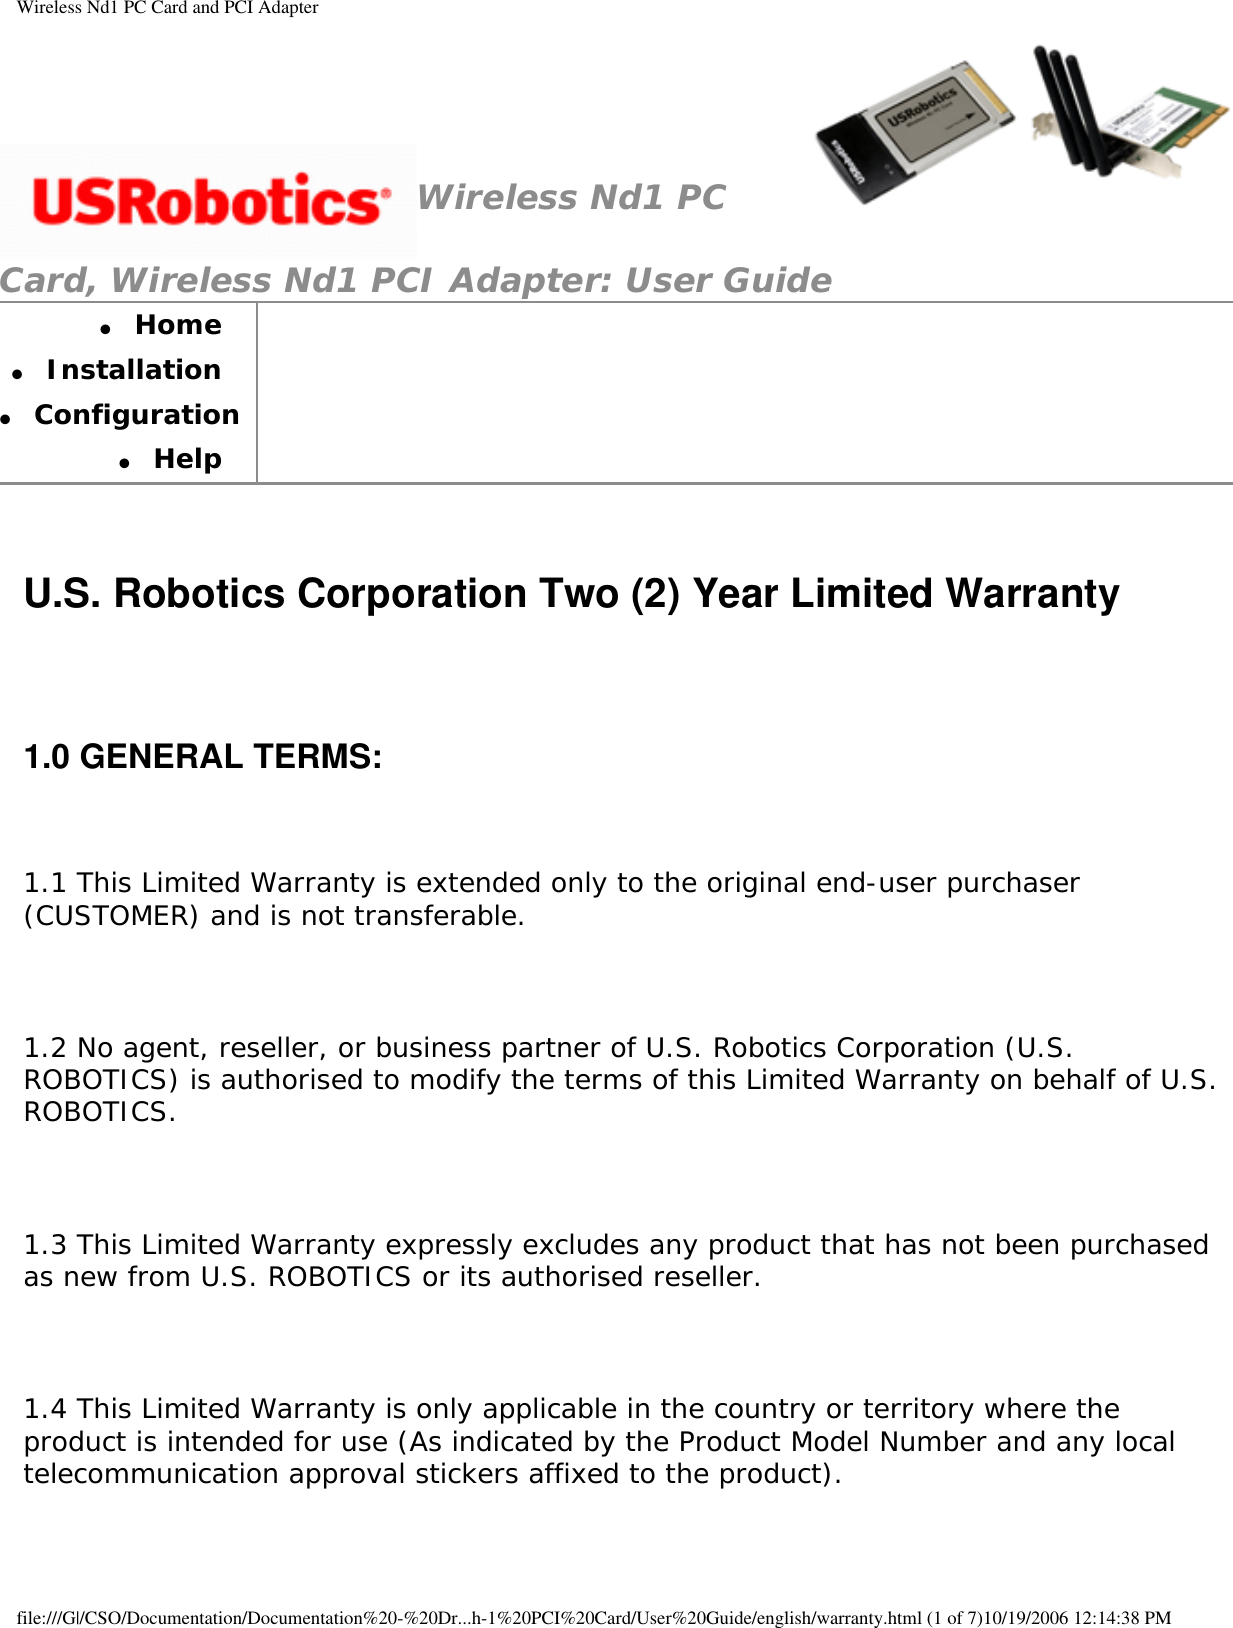 Page 52 of GemTek Technology P950622G USRobotics Wireless Nd1 PCI Adapter User Manual Wireless Nd1 PC Card and PCI Adapter